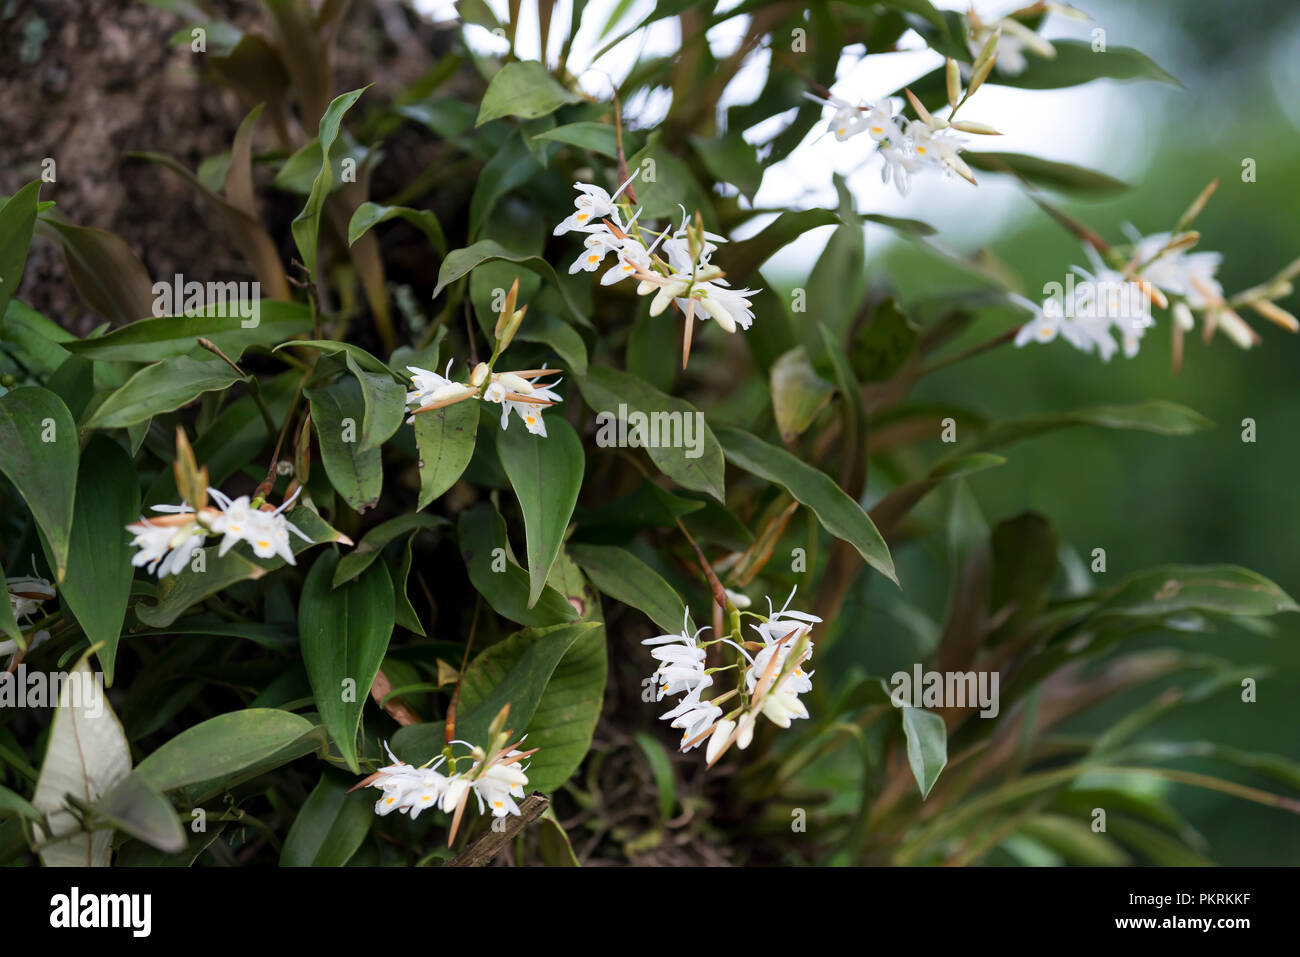 Dendrobium infundibulum Lindl, White rare wild orchids grow in the rainforest, Vietnam Stock Photo